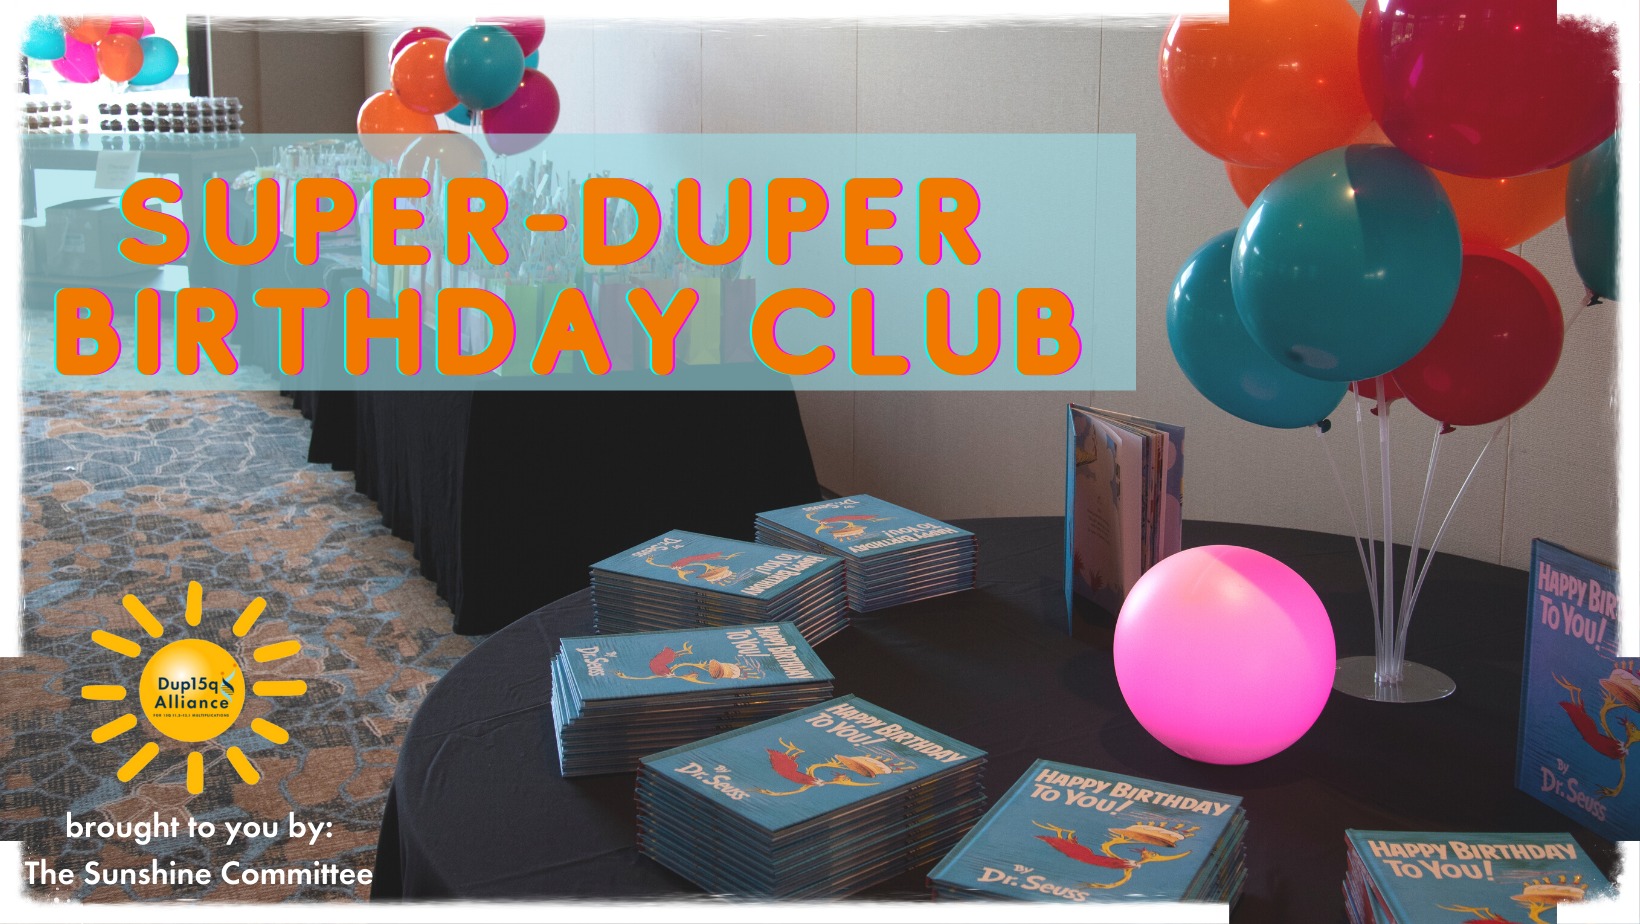 Super Duper födelsedagsklubb